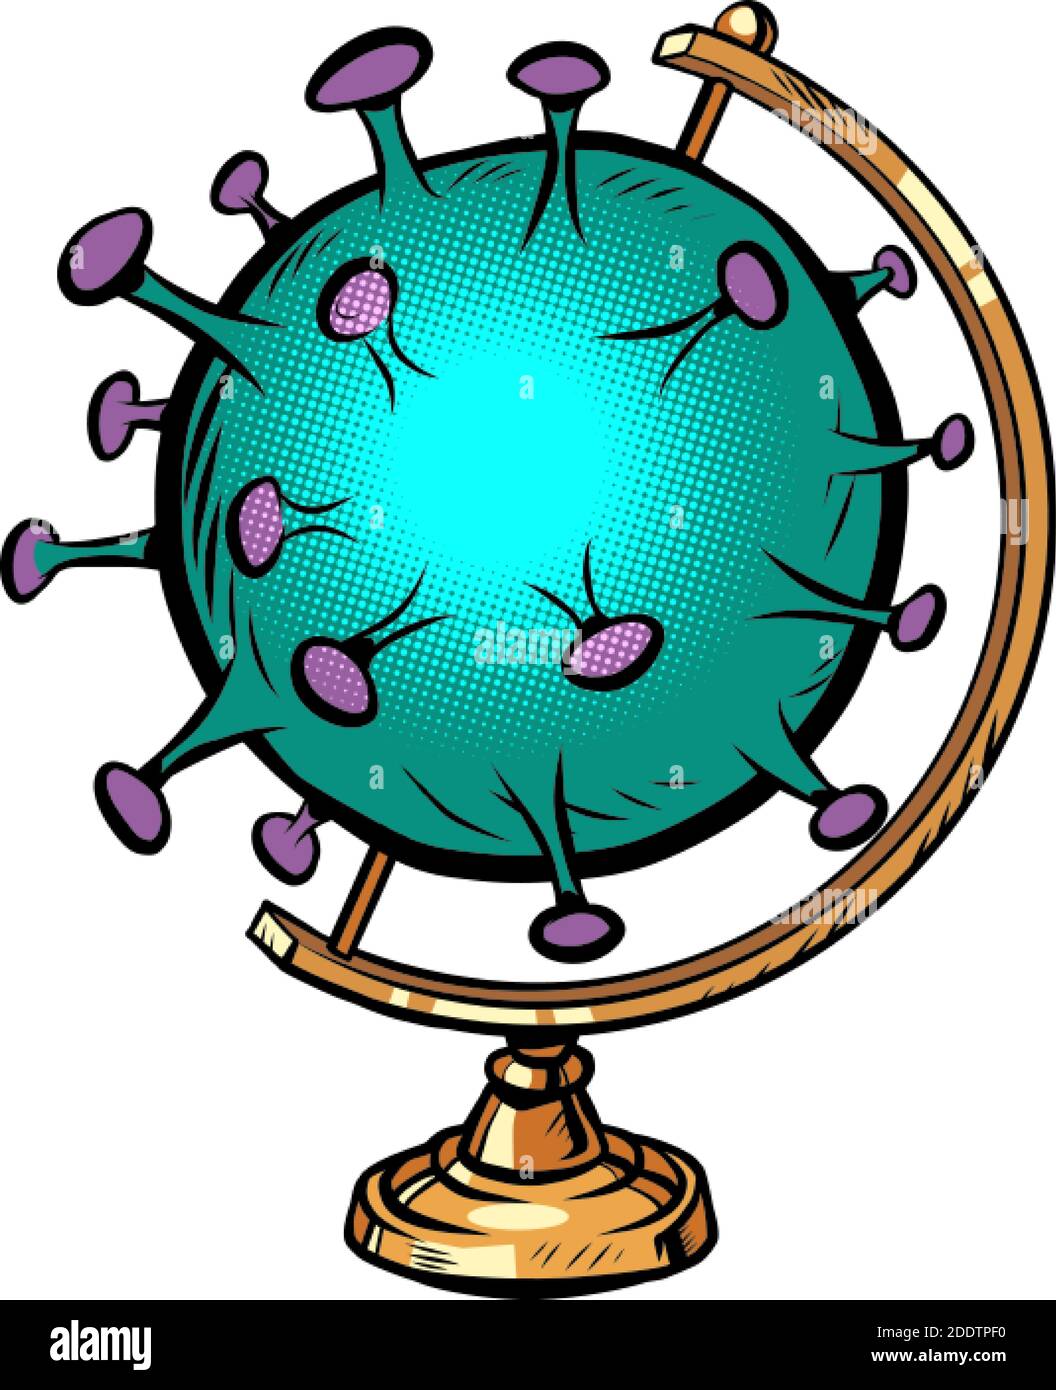 Globe internationale Coronavirus grünen Virus covid19 Epidemie Stock Vektor